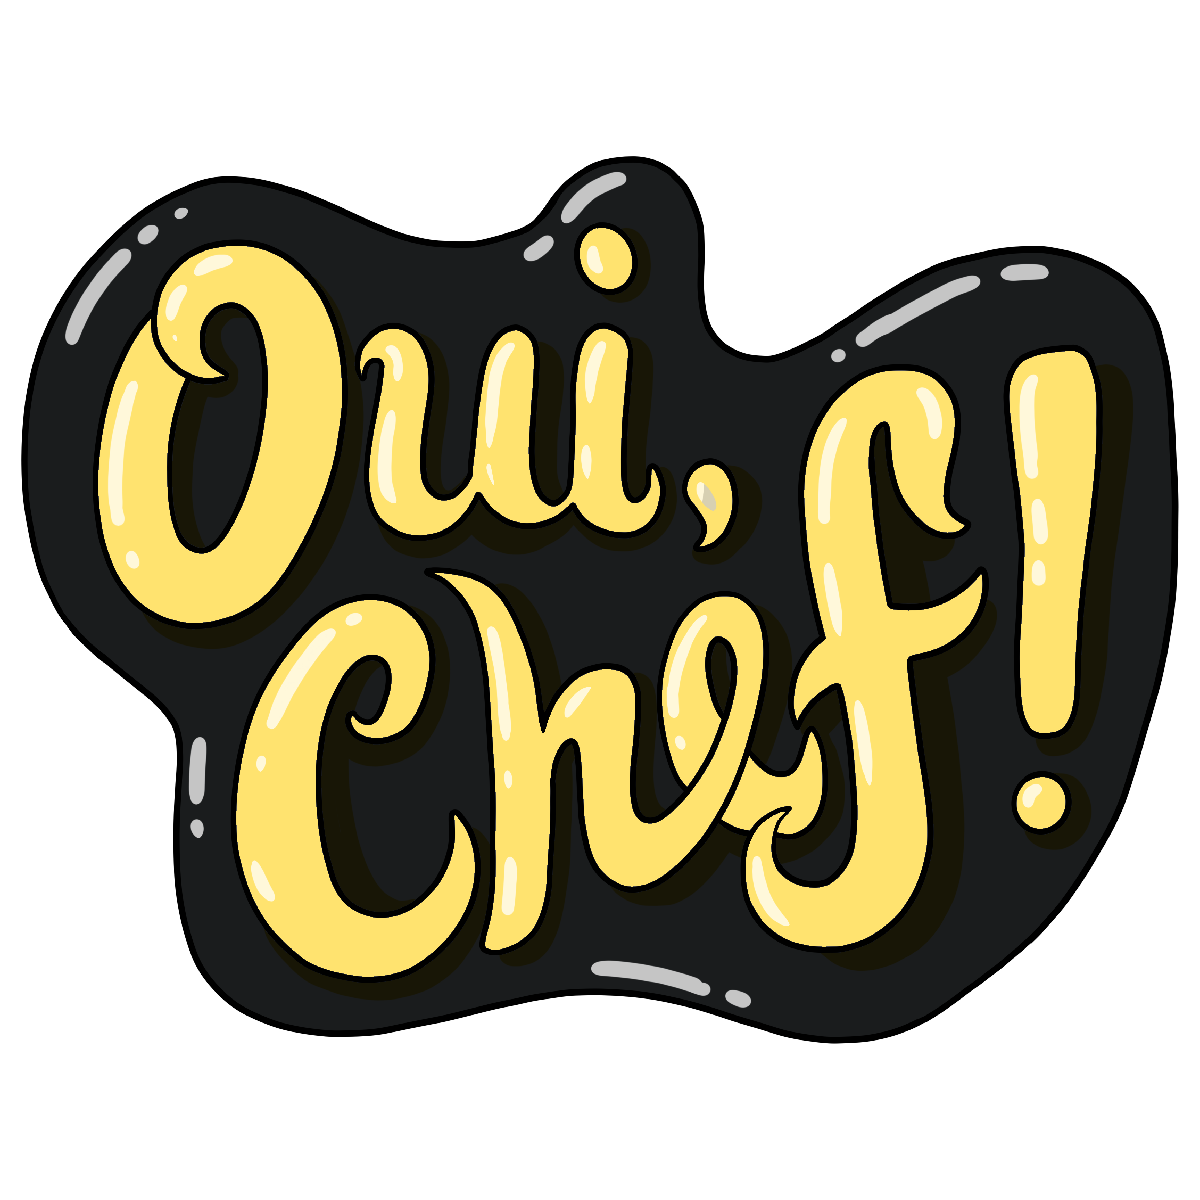 Yellowjacket Chefwear Oui Chef Graphic Sticker Cartoon